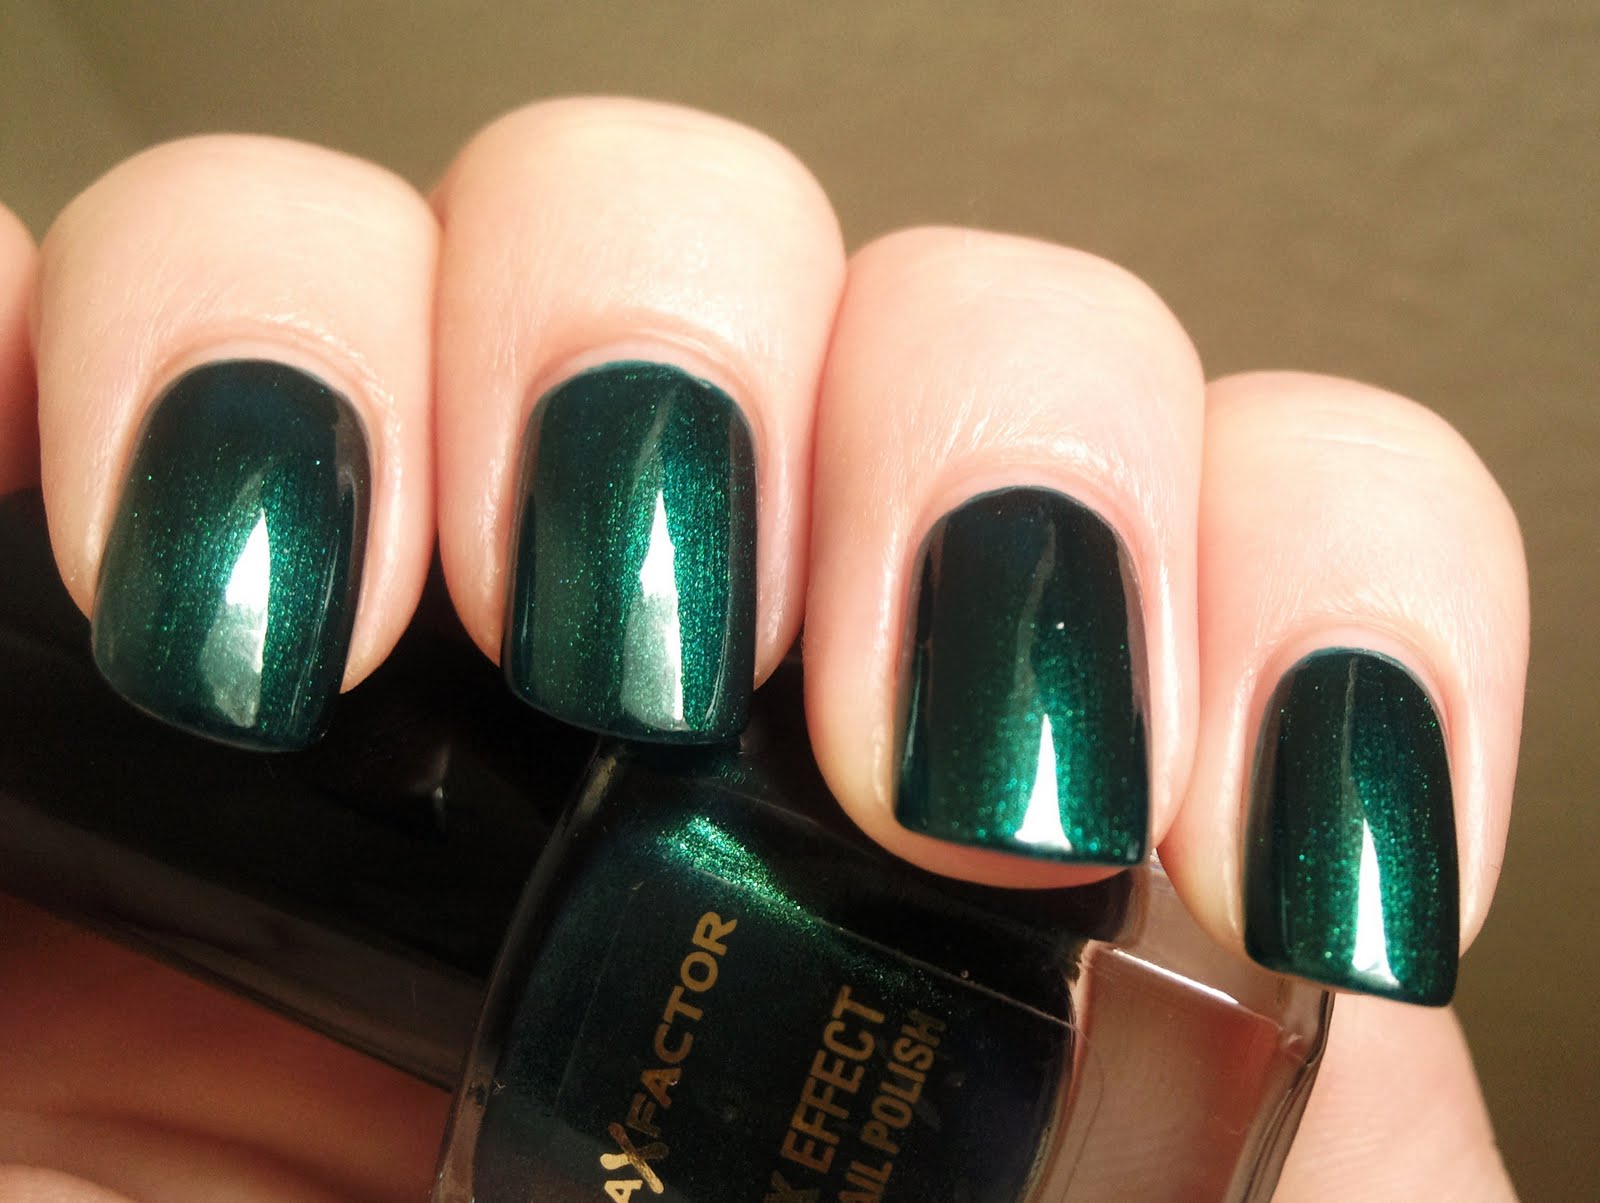 5. "Emerald Green" - wide 3